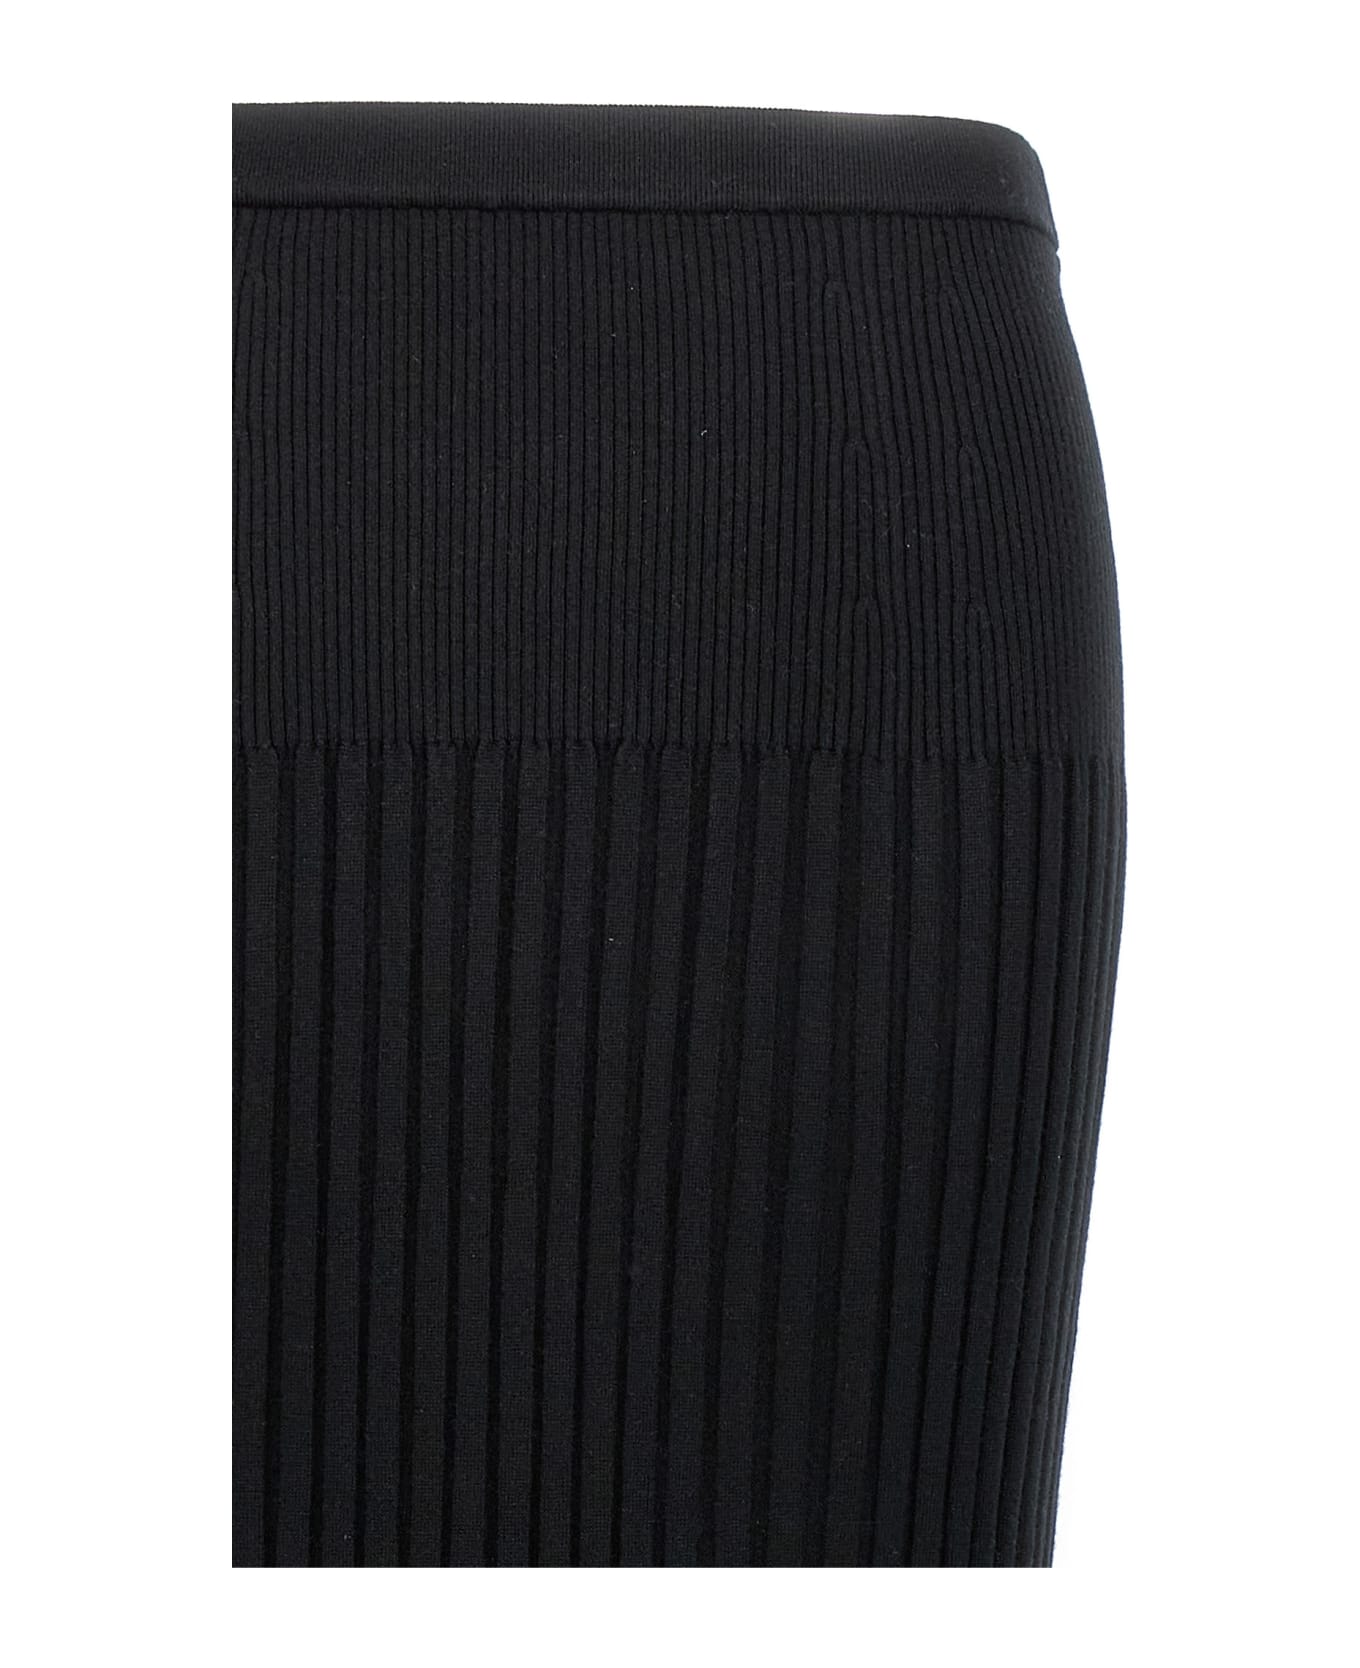 Proenza Schouler Ribbed Skirt - Black   スカート